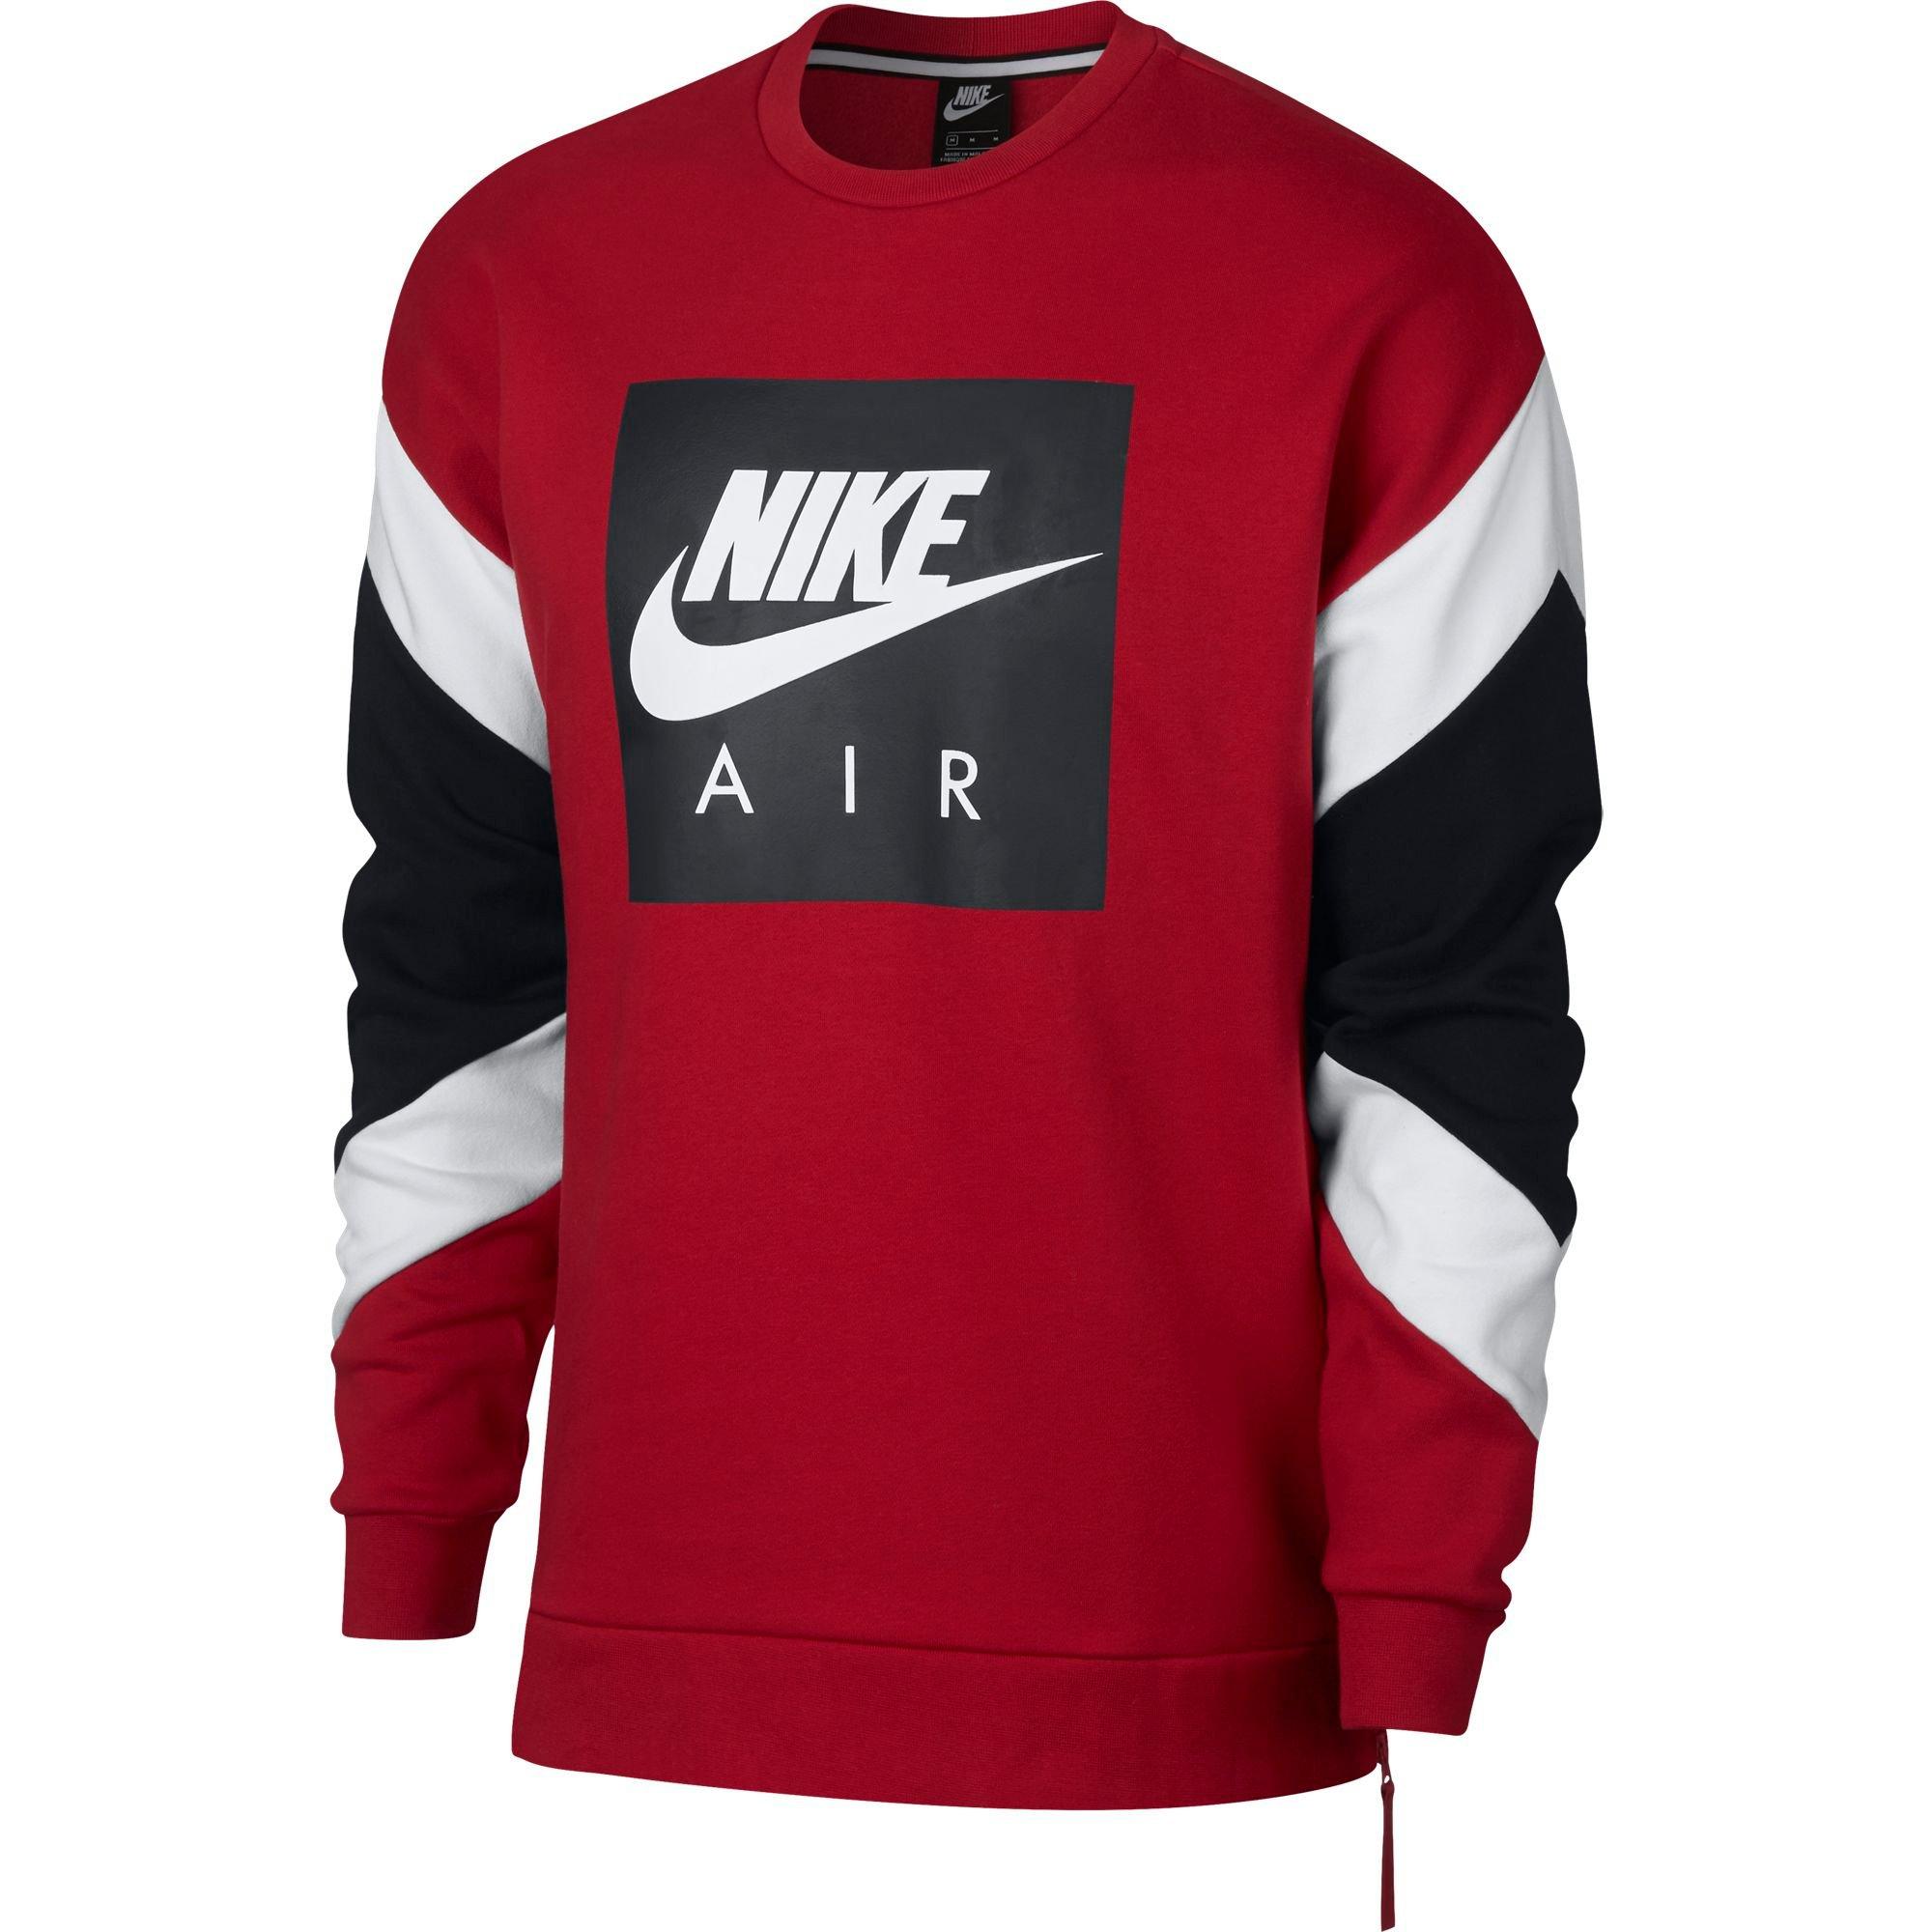 red and black nike sweatshirt